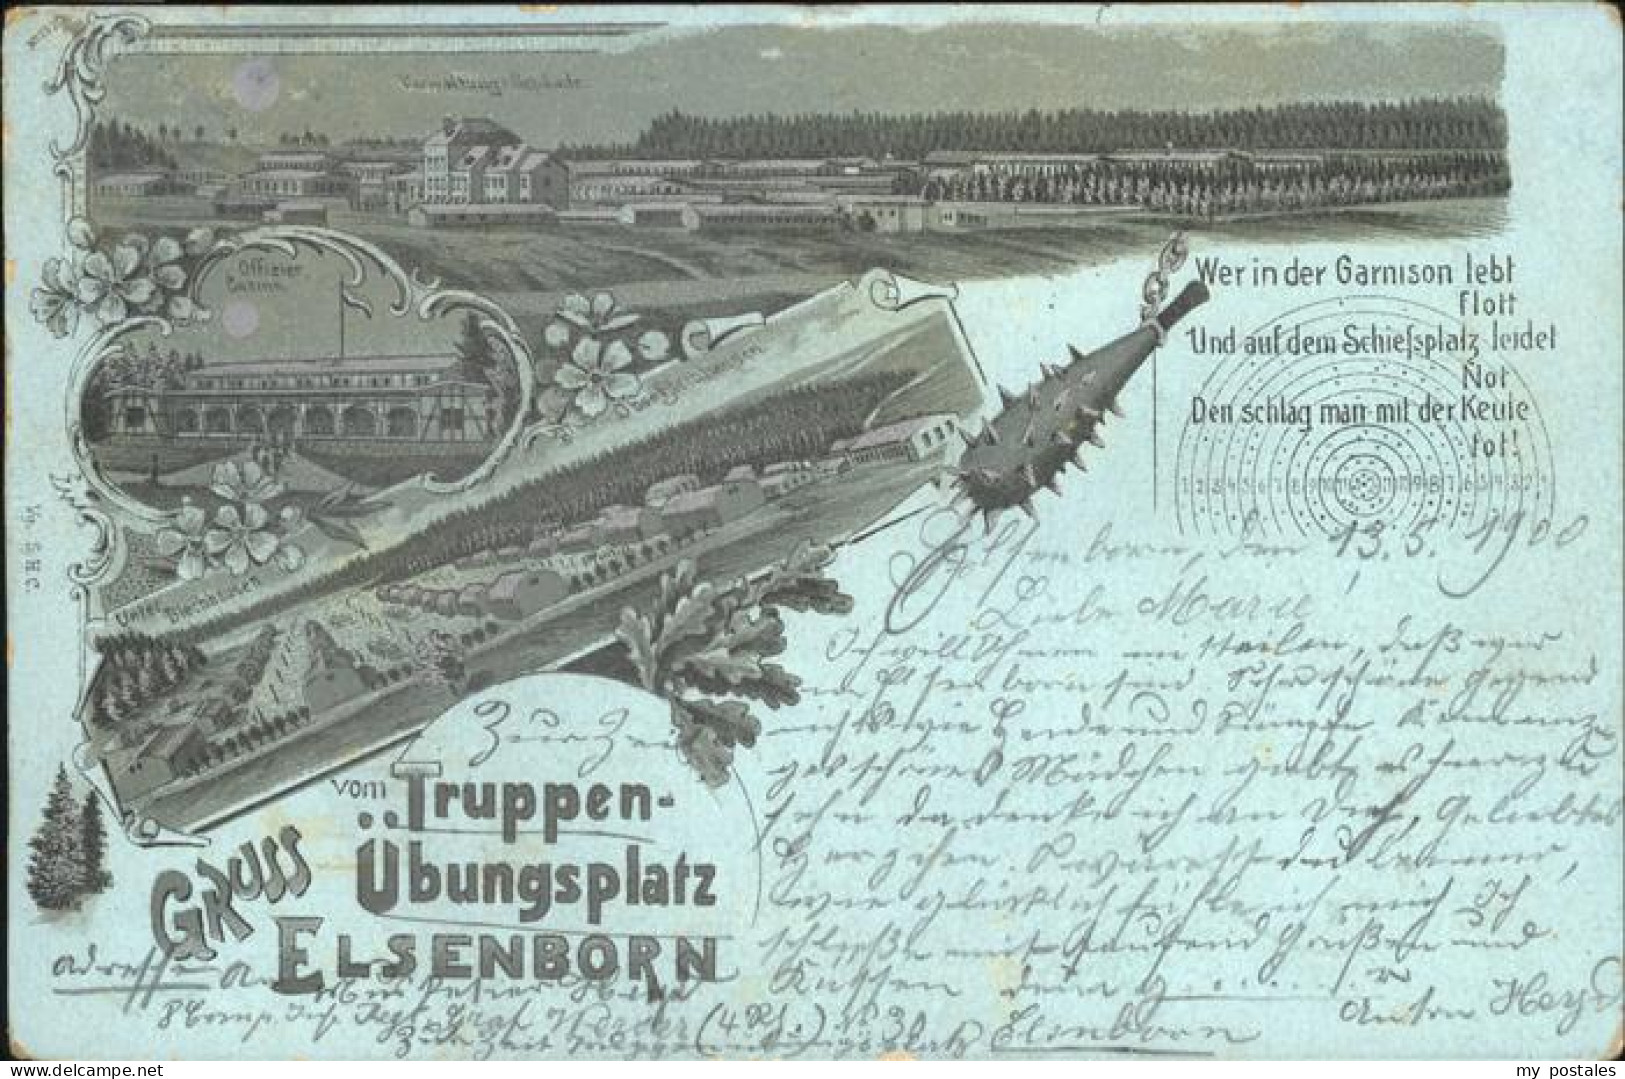 41108274 Elsenborn Mondscheinkarte
Truppenuebungsplatz Elsenborn - Elsenborn (camp)